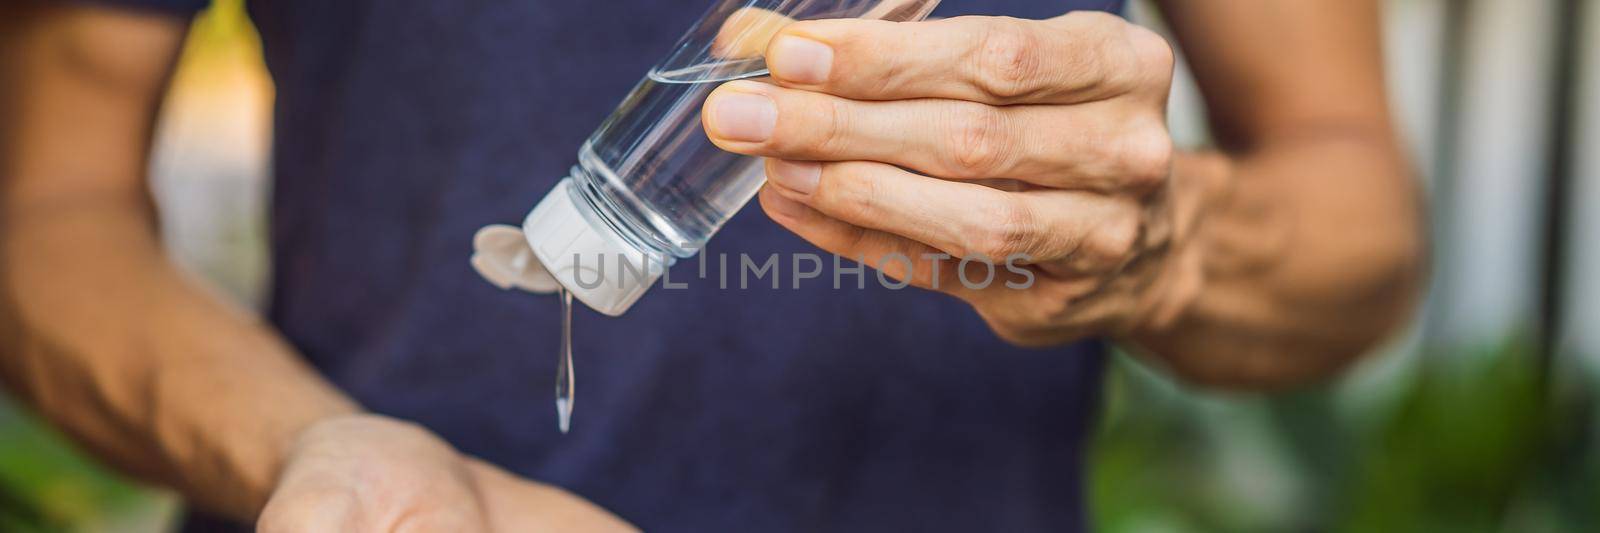 Men's hands using wash hand sanitizer gel BANNER, LONG FORMAT by galitskaya